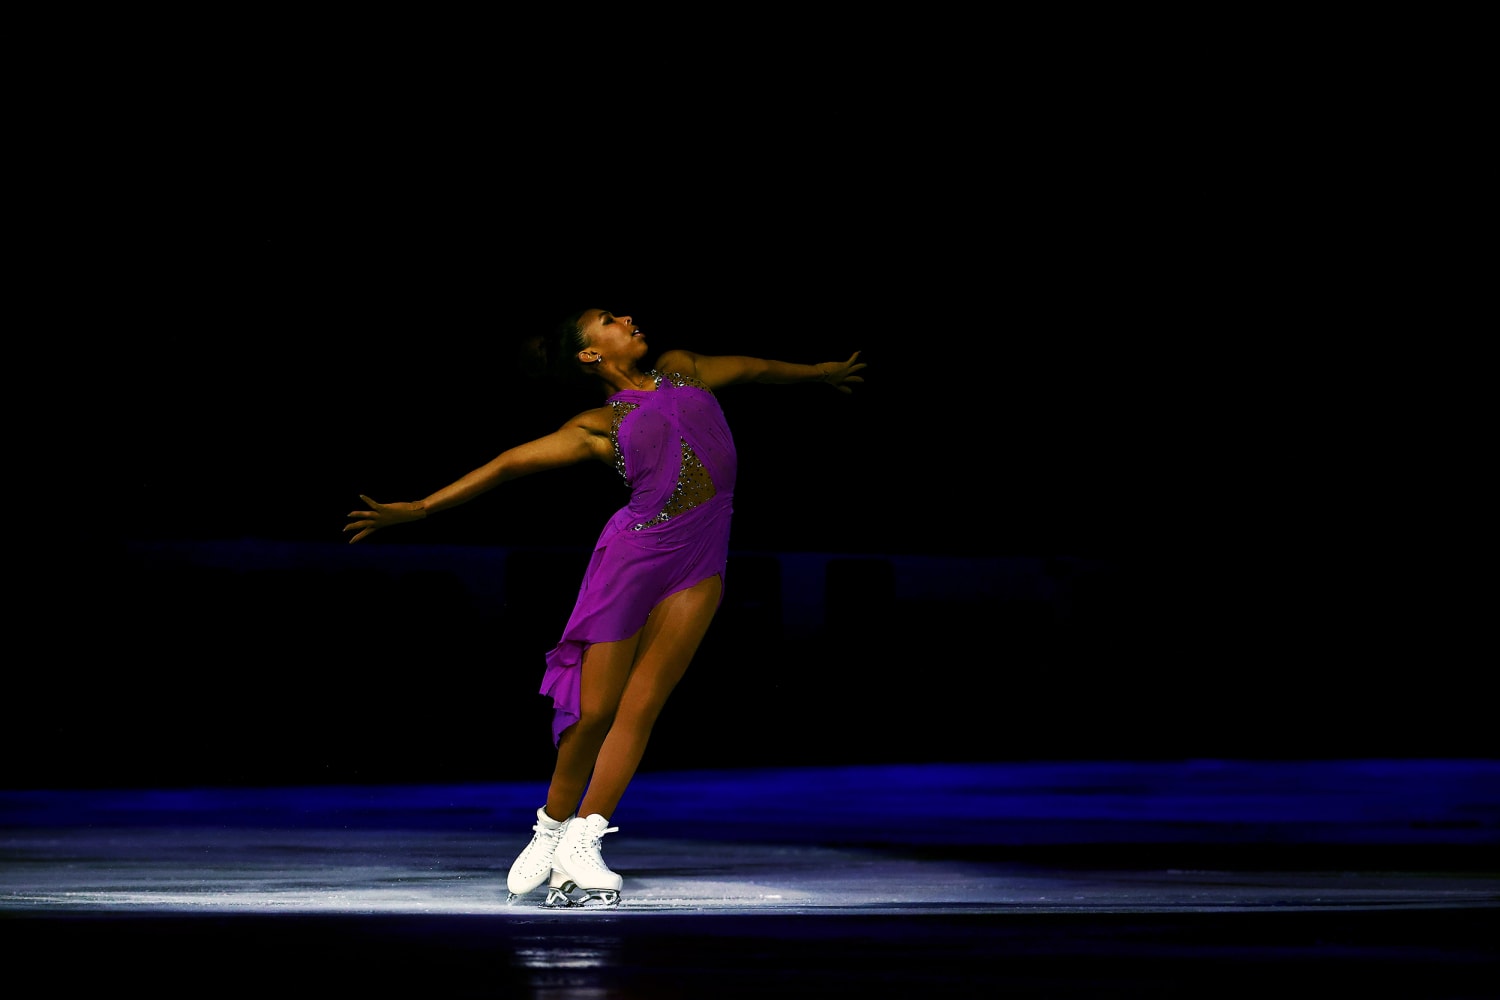 ADULT MEDIUM New Figure Ice Skating Dress Baton Twirling Dance  USA SELLER 